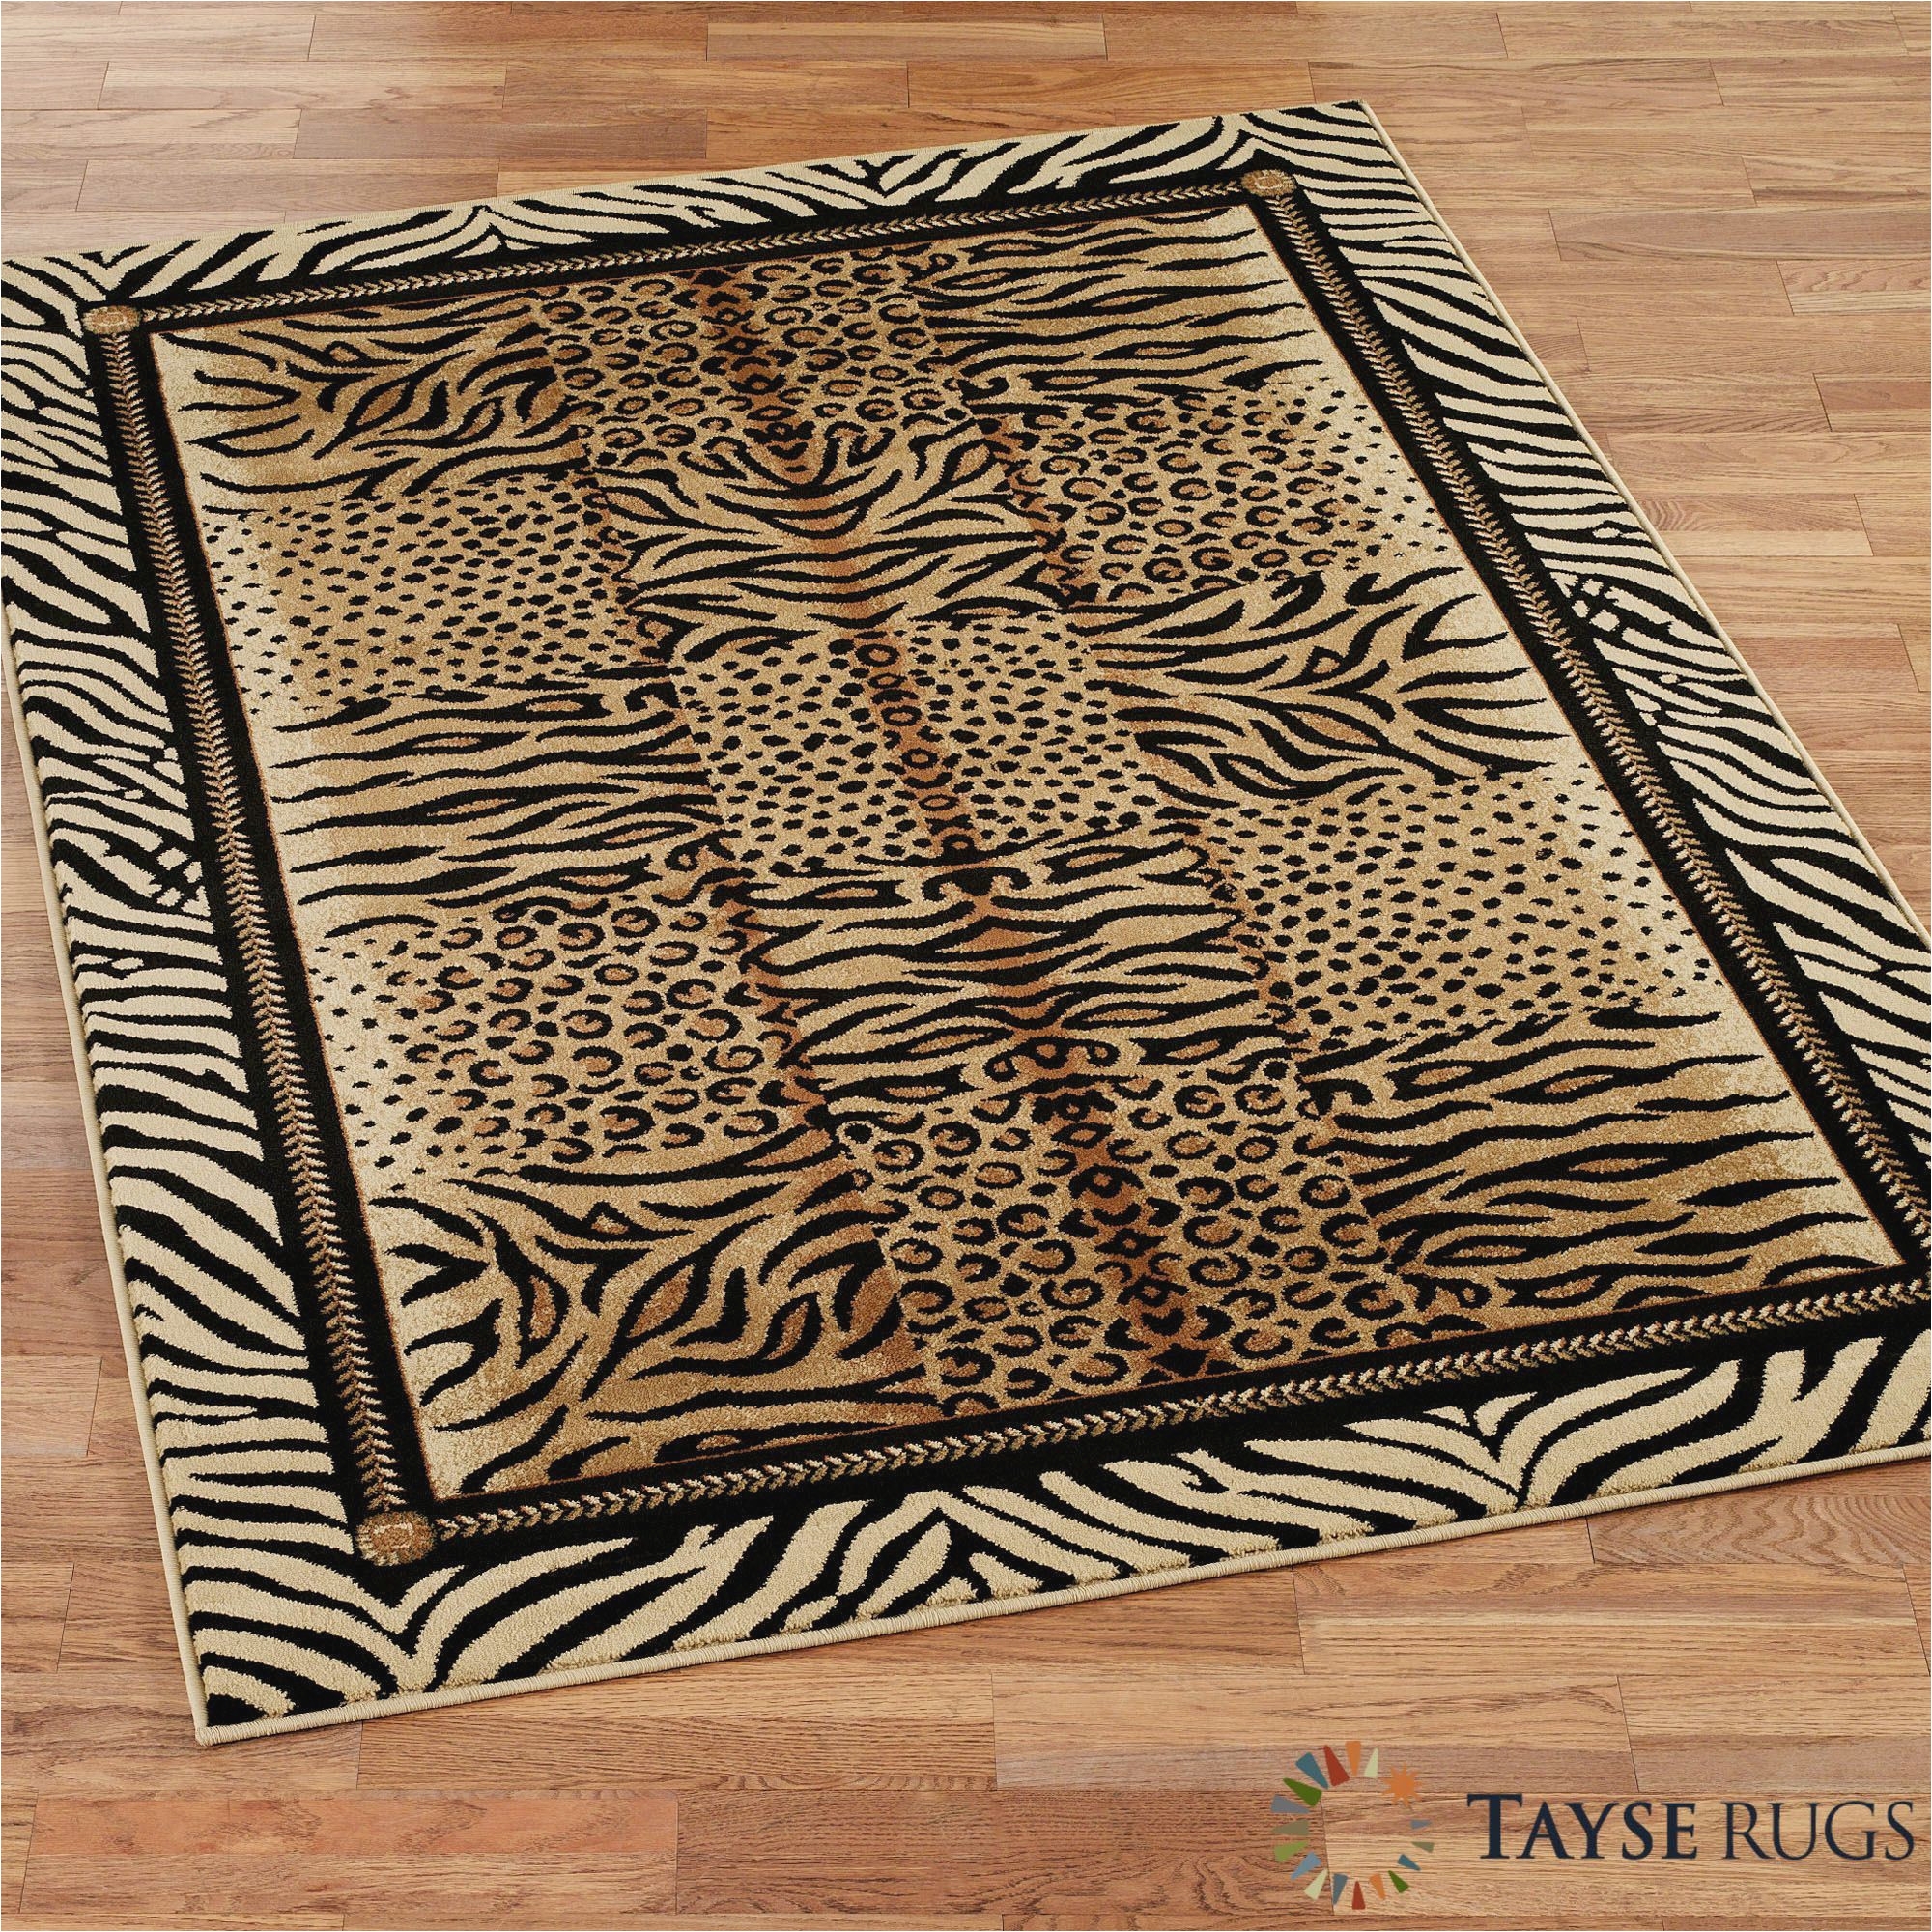 floor round zebra print area rug gorgeous foflor animal print area rugs unique doormats